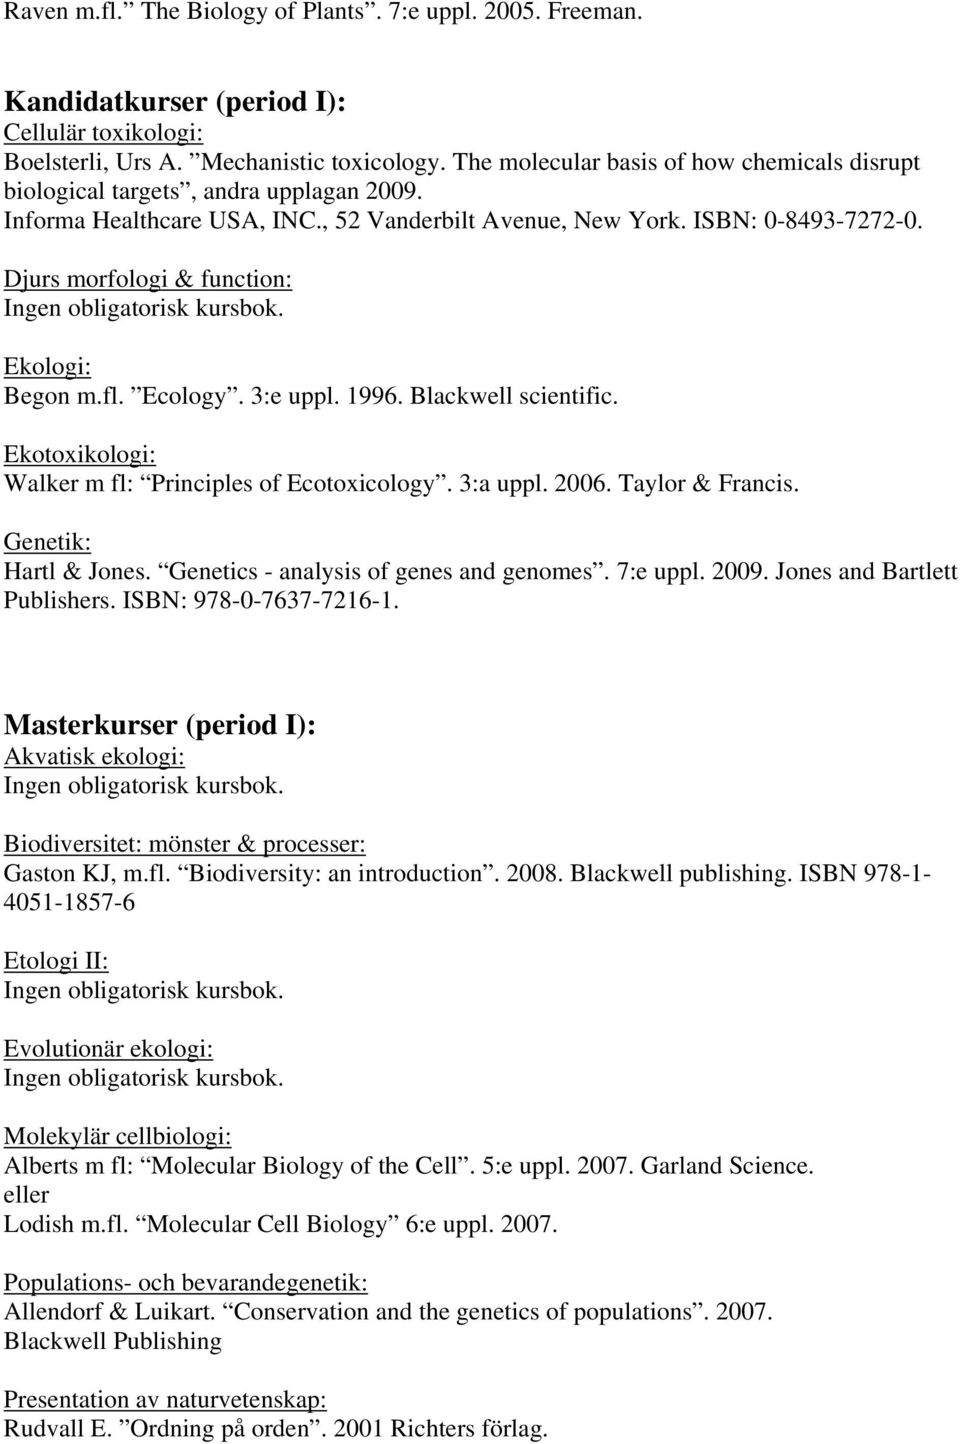 Djurs morfologi & function: Ekologi: Begon m.fl. Ecology. 3:e uppl. 1996. Blackwell scientific. Ekotoxikologi: Walker m fl: Principles of Ecotoxicology. 3:a uppl. 2006. Taylor & Francis.